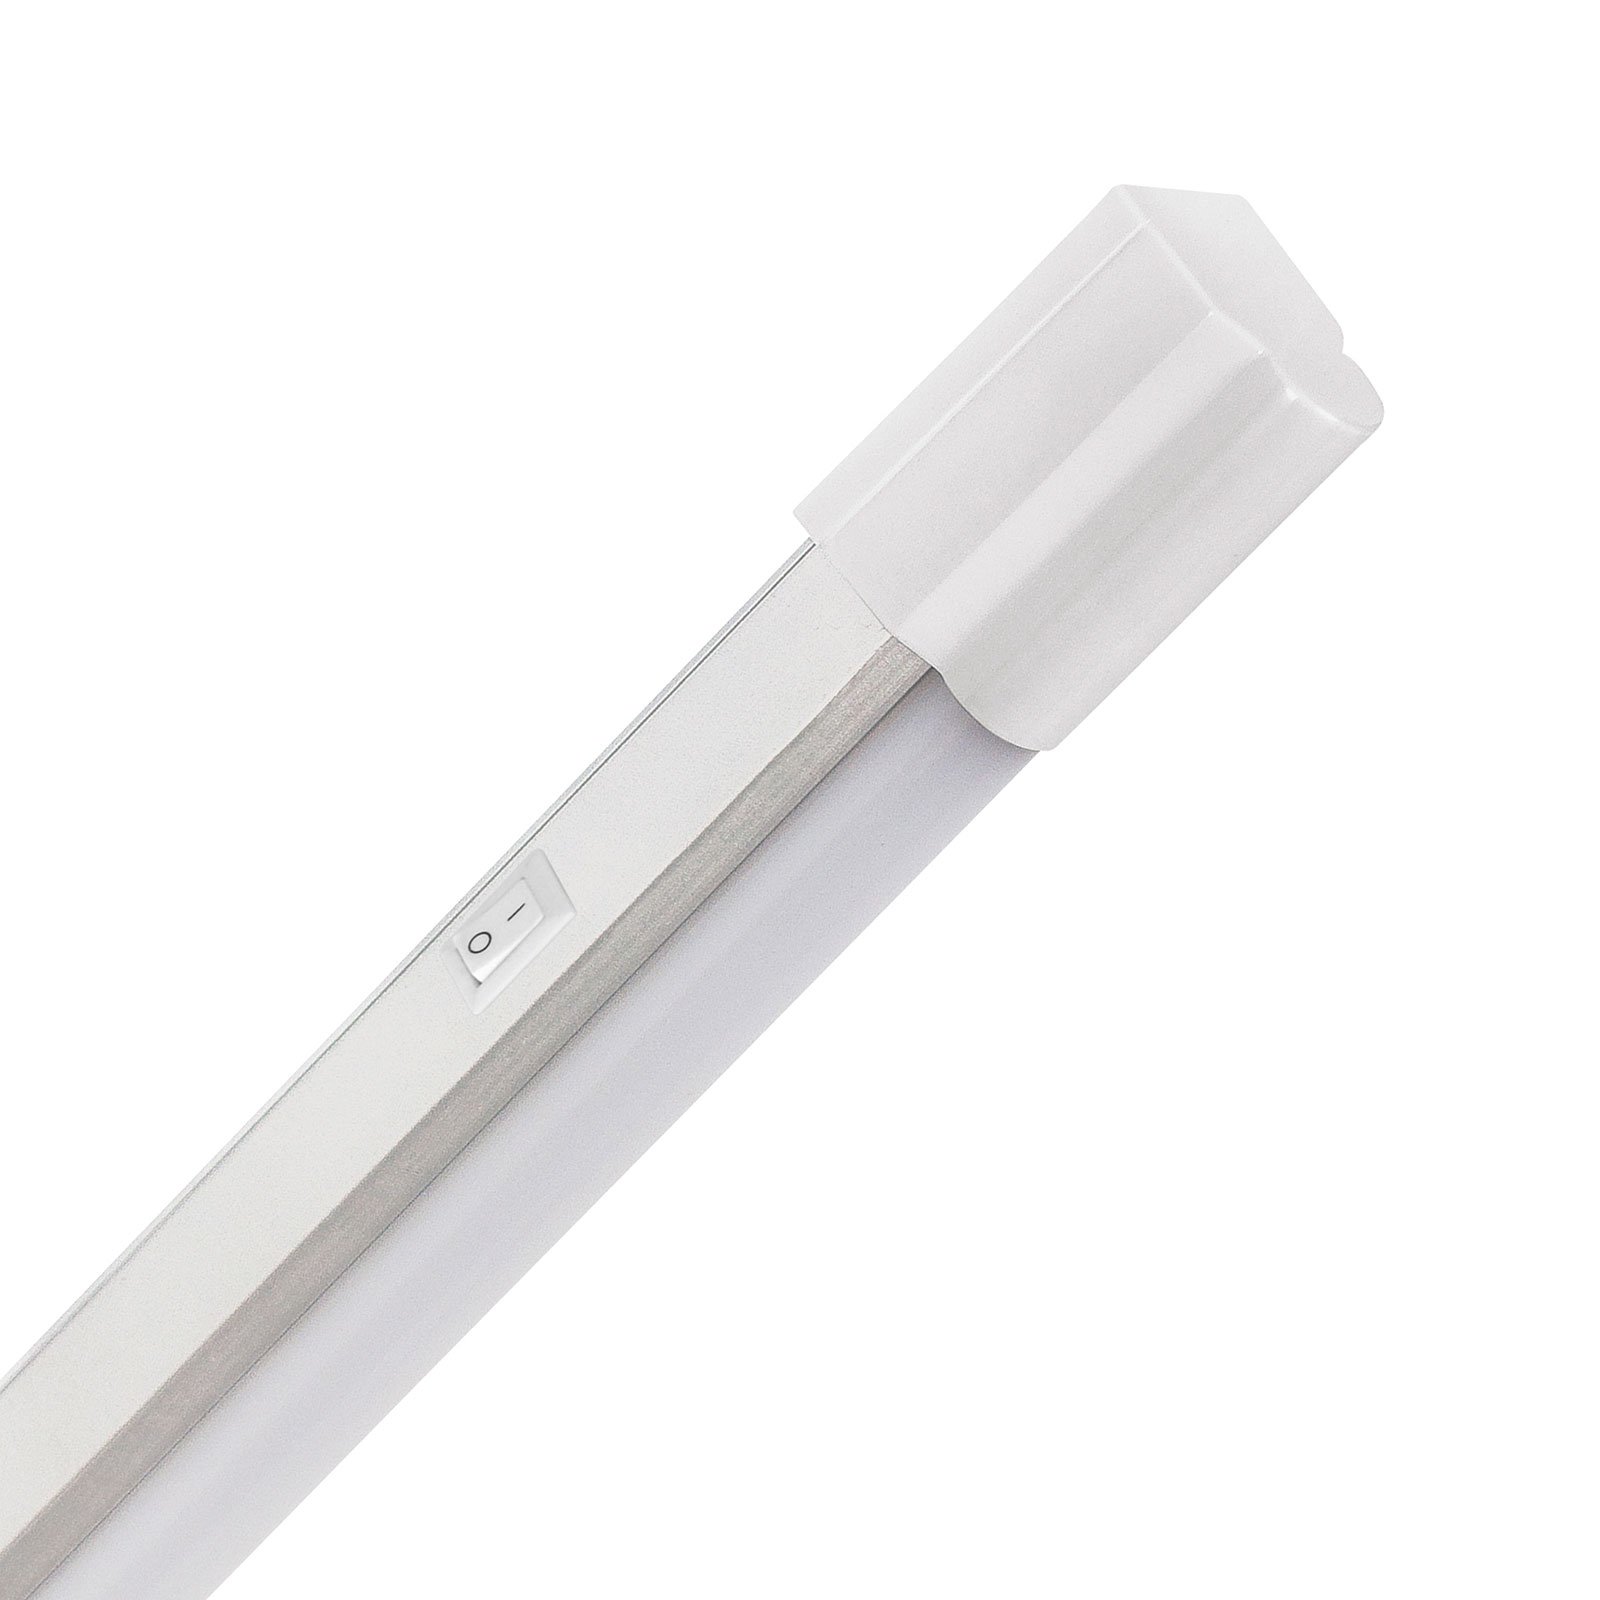 "Arax 45" LED šviestuvas po spinta, 42,6 cm, 4 W